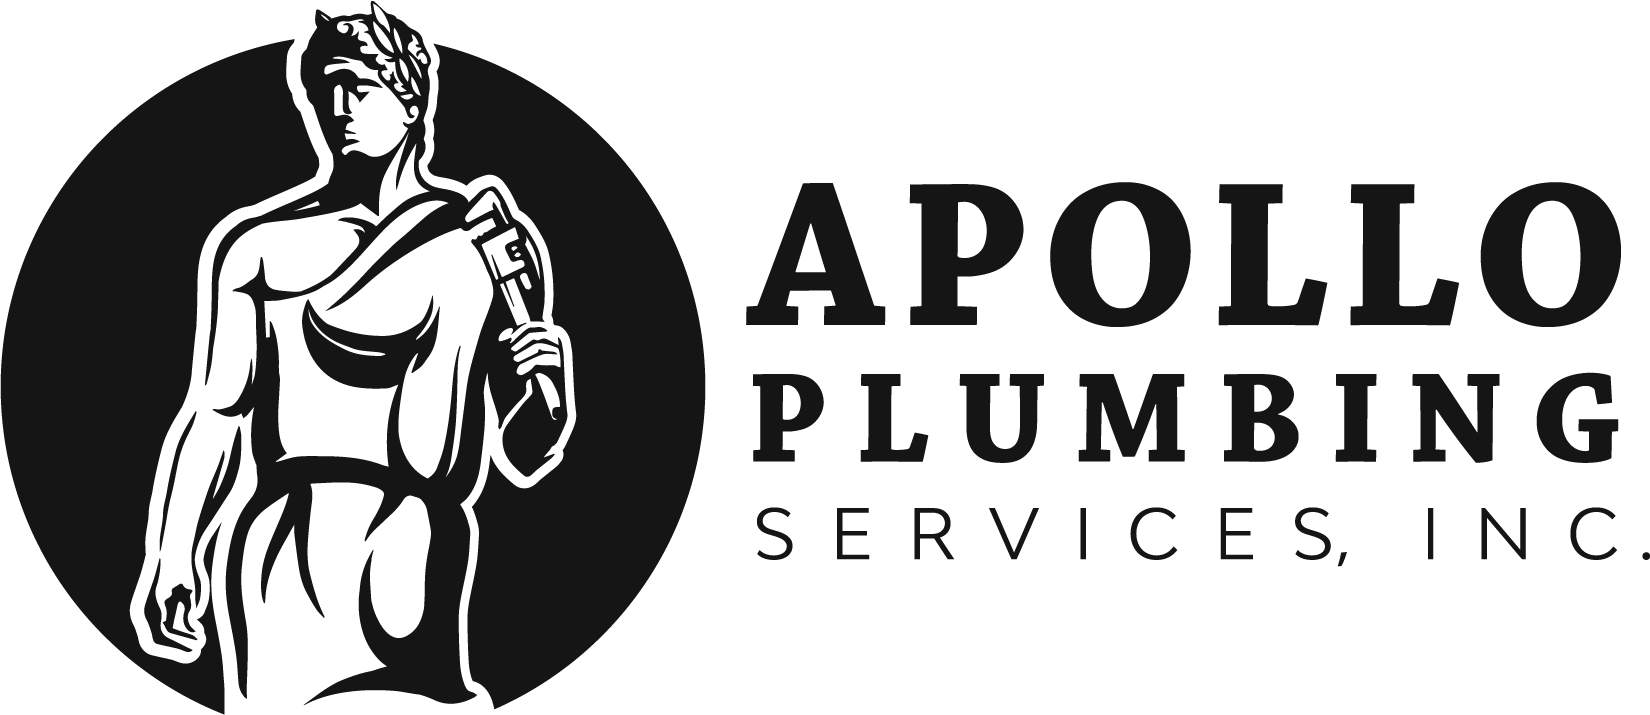 Apollo Plumbing Services